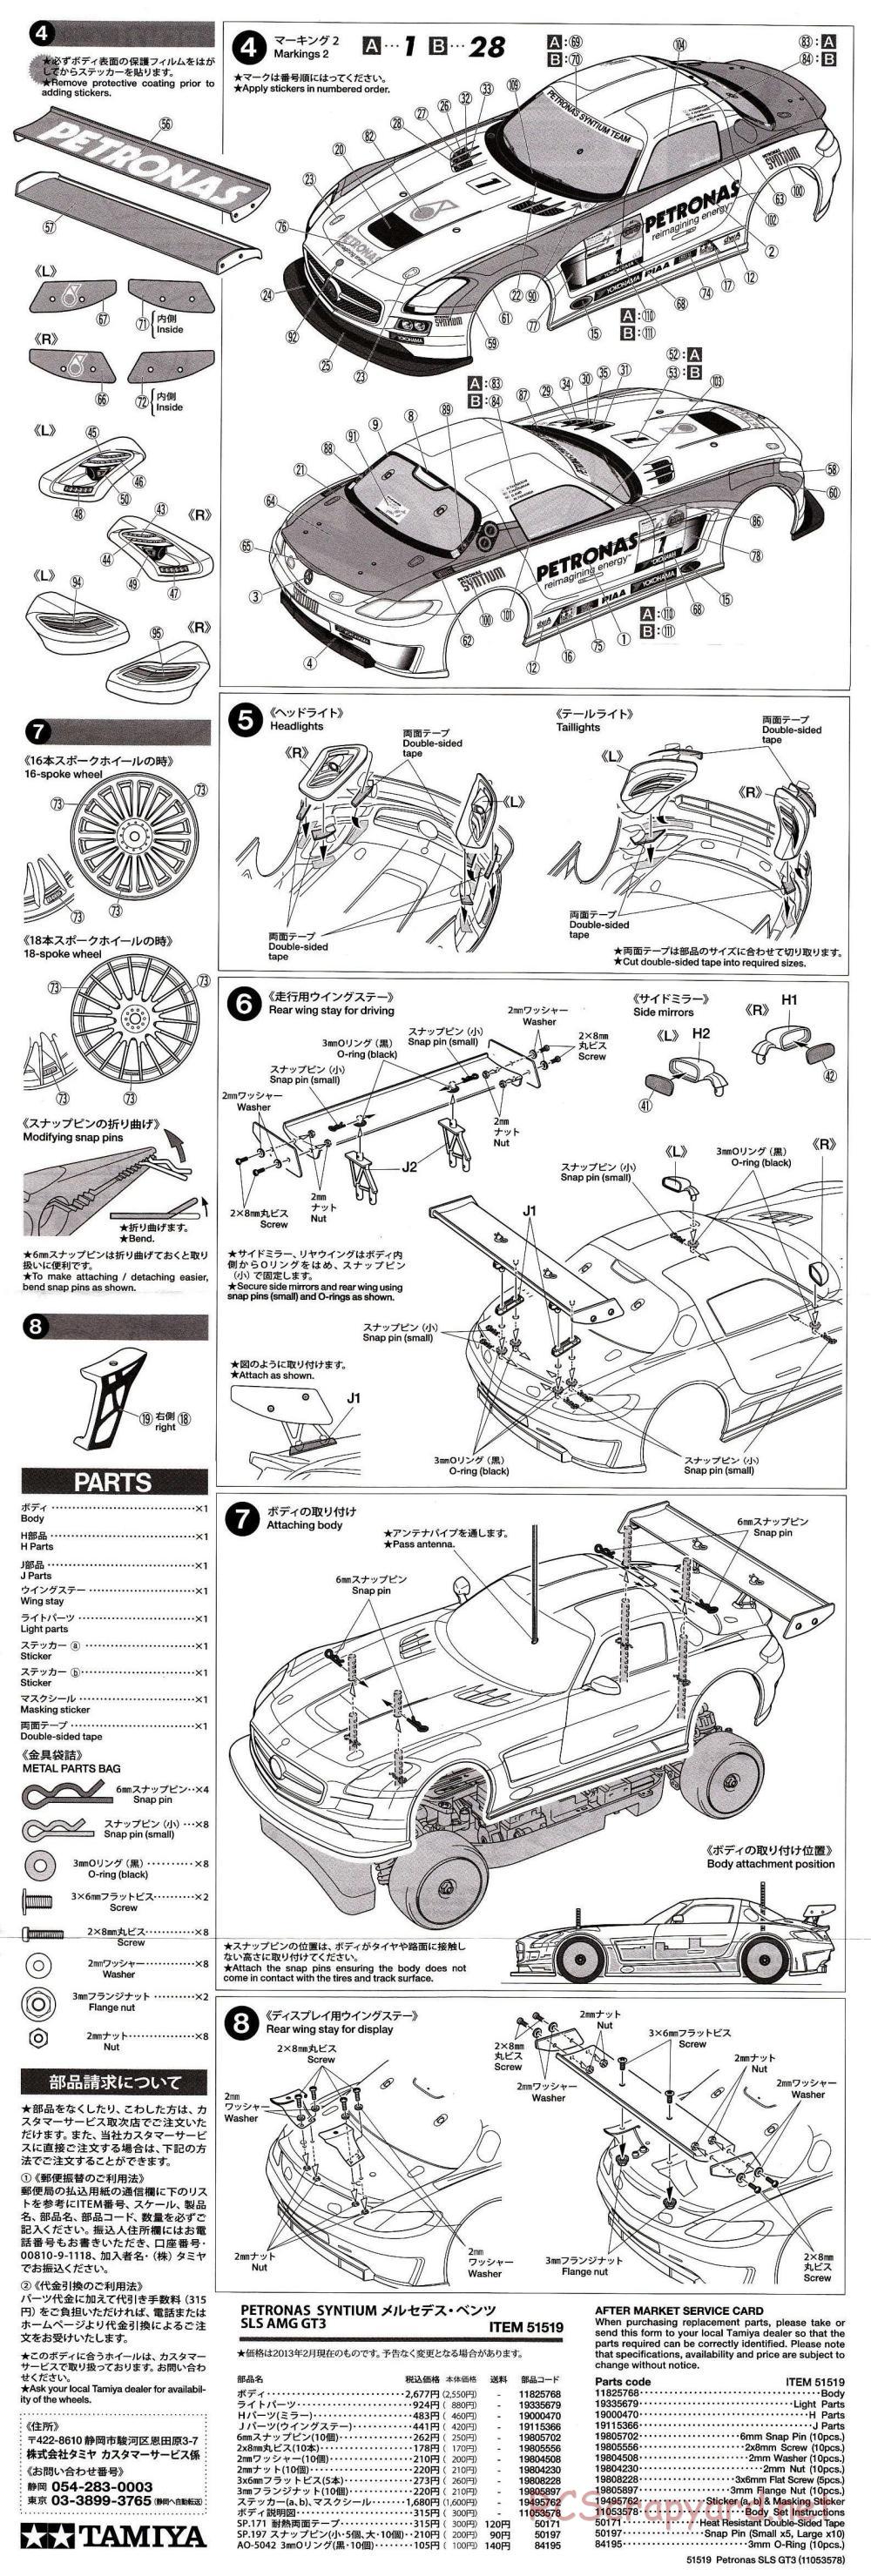 Tamiya - Mercedes Benz SLS AMG GT3 - TA06 Chassis - Body Manual - Page 2